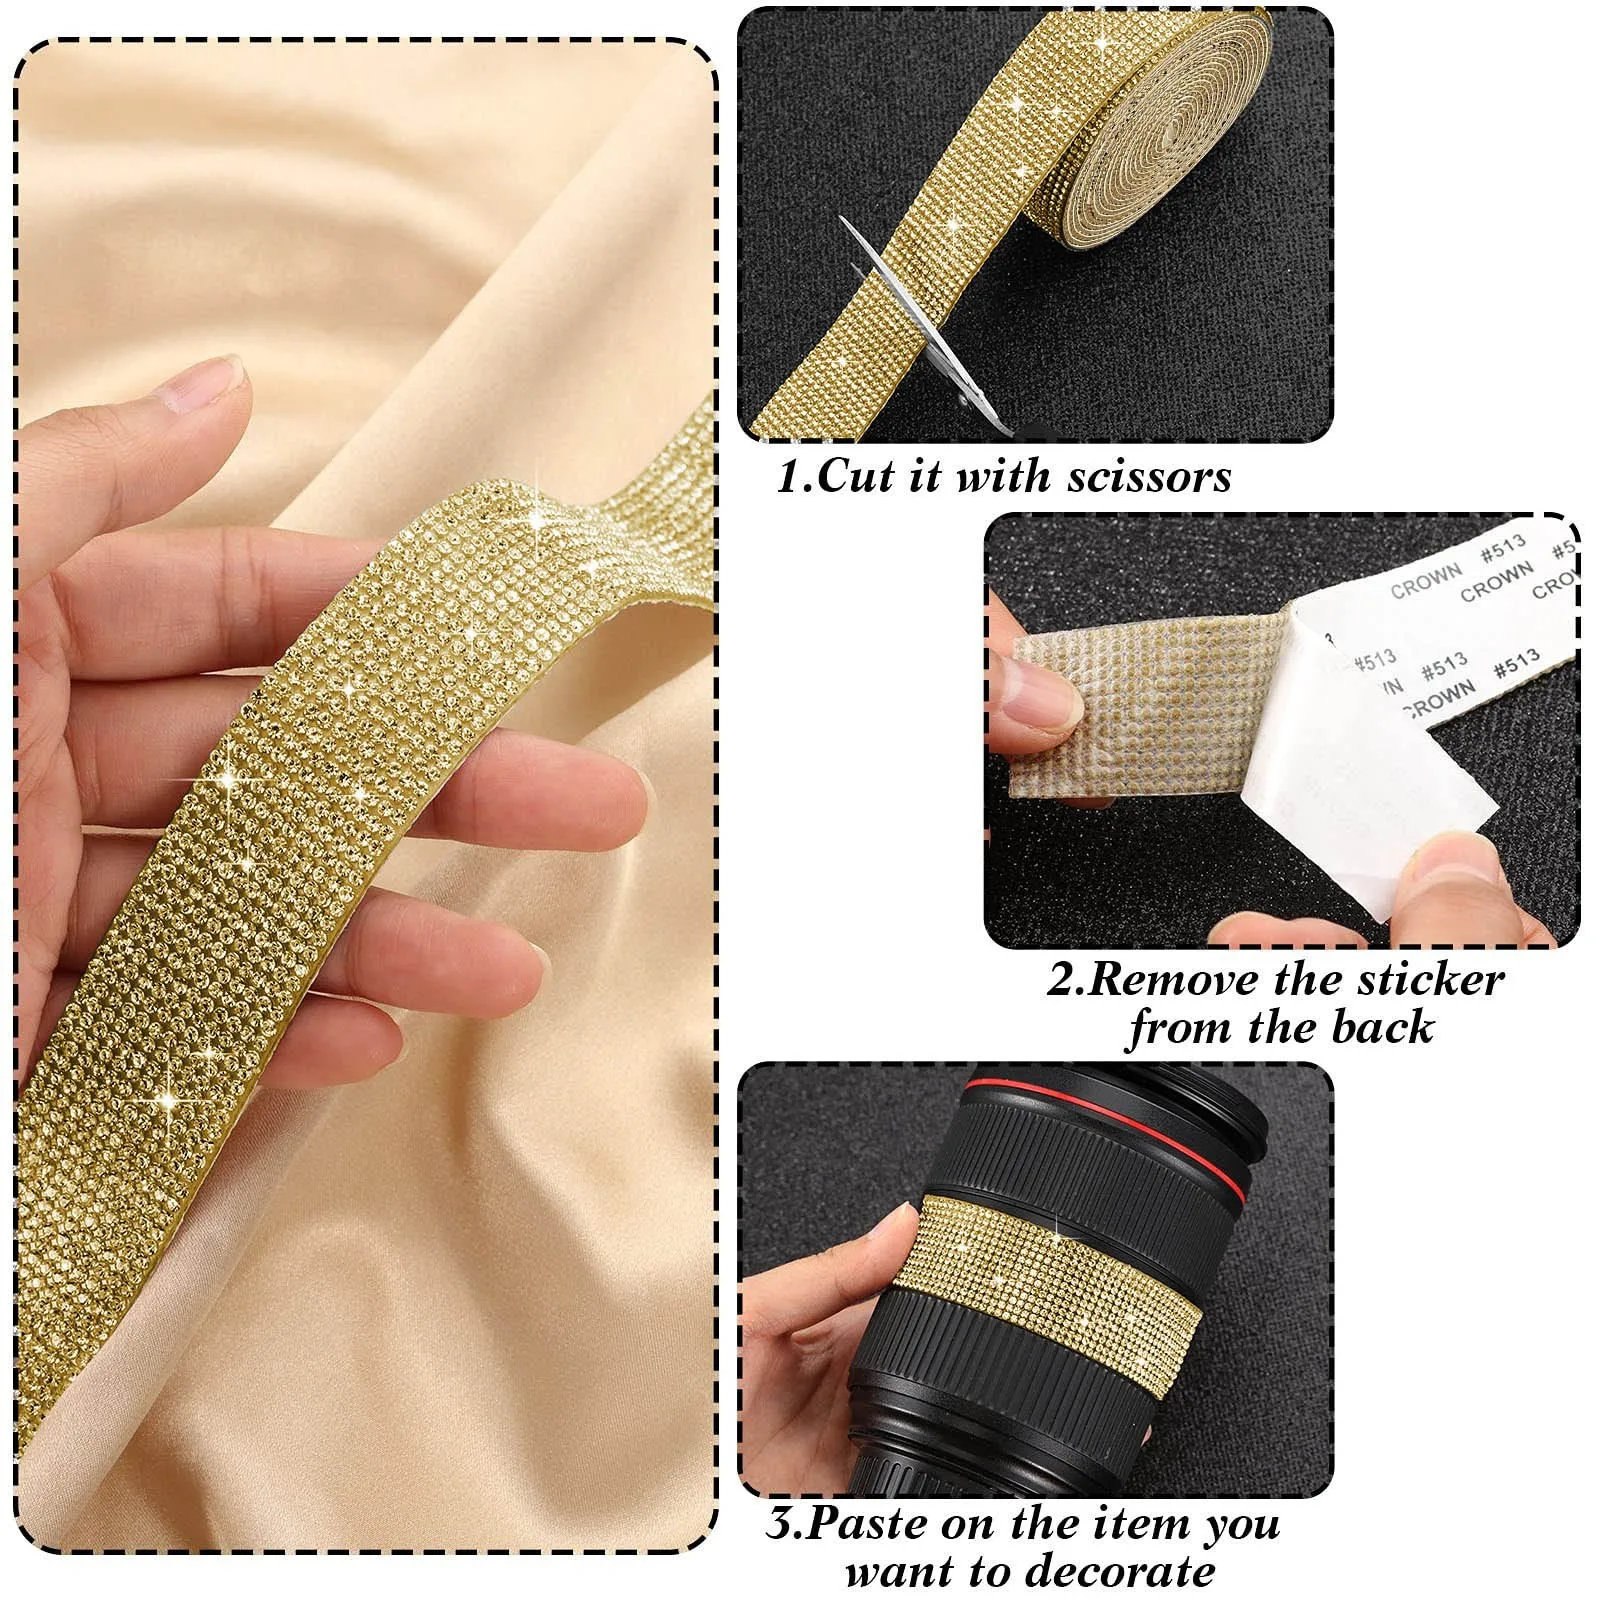 Self-adhesive Crystal Rhinestone Diamond Ribbon Diy Decoration Sticker With Rhinestones For Arts Crafts Decoration Gold #50g tree wall decal